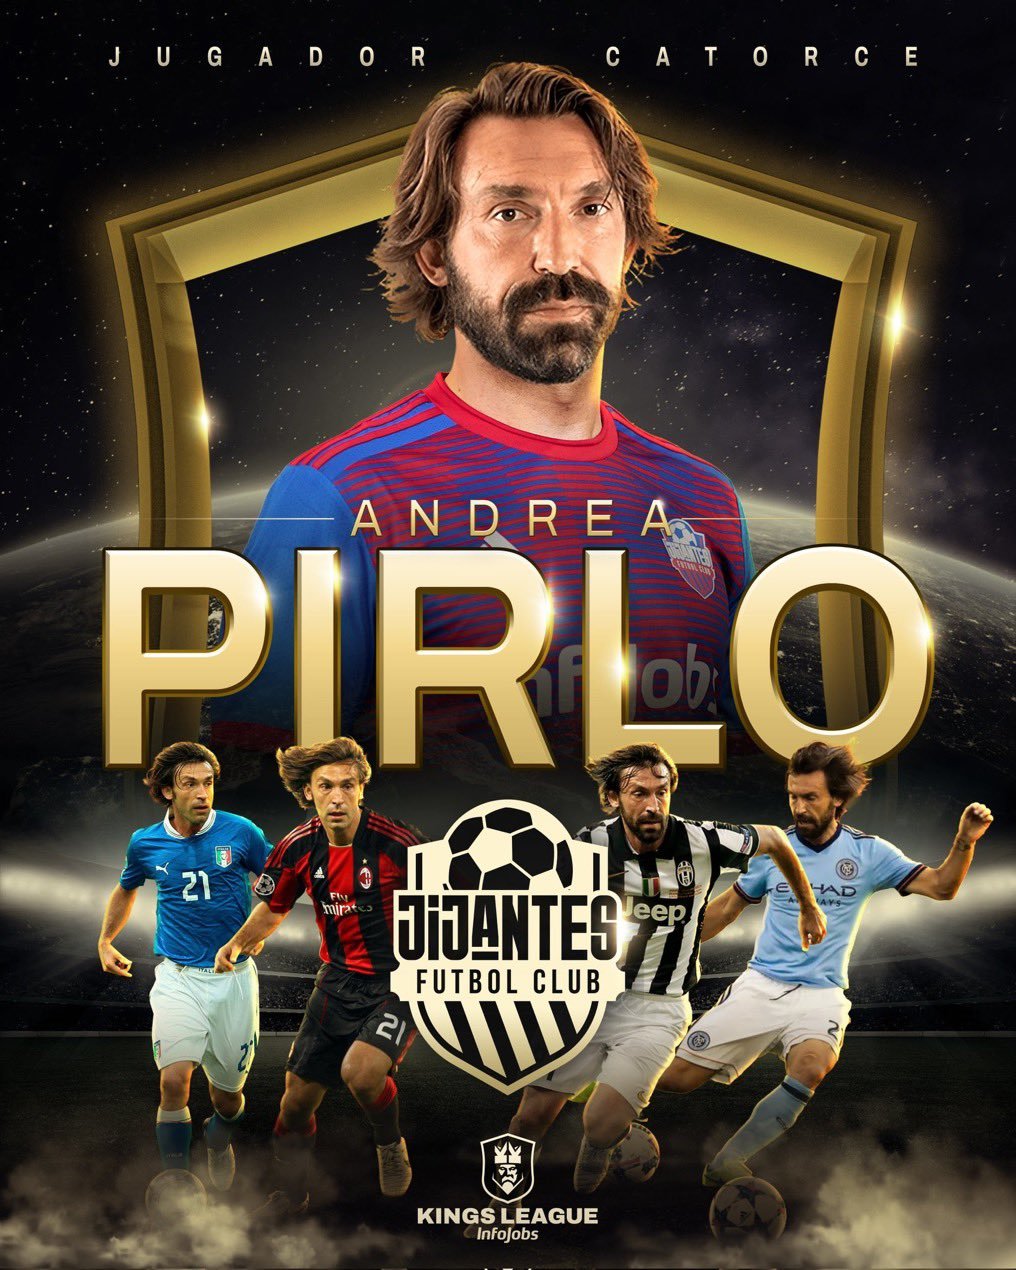 Andrea Pirlo jugar en la Kings League InfoJobs!